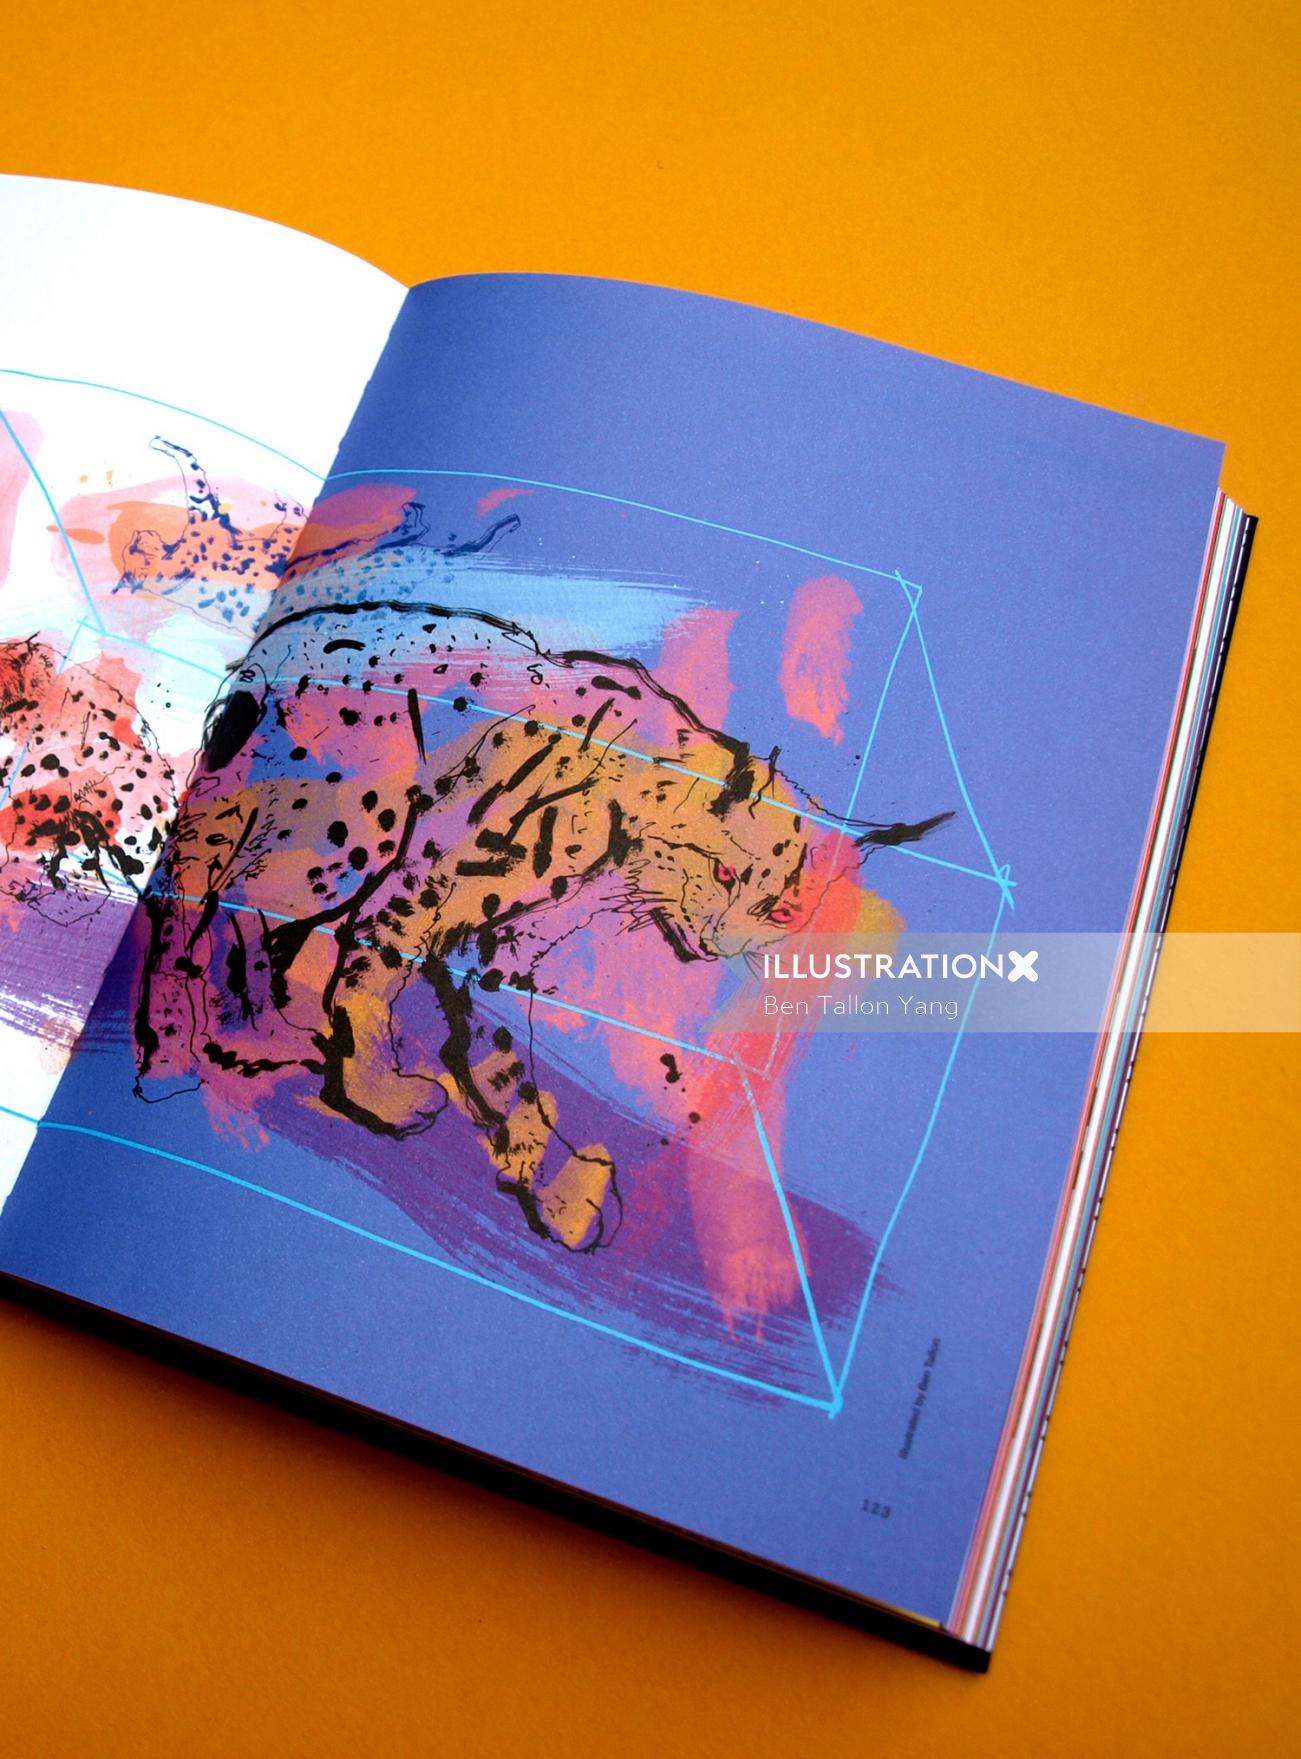 Lynx watercolor illustration on book